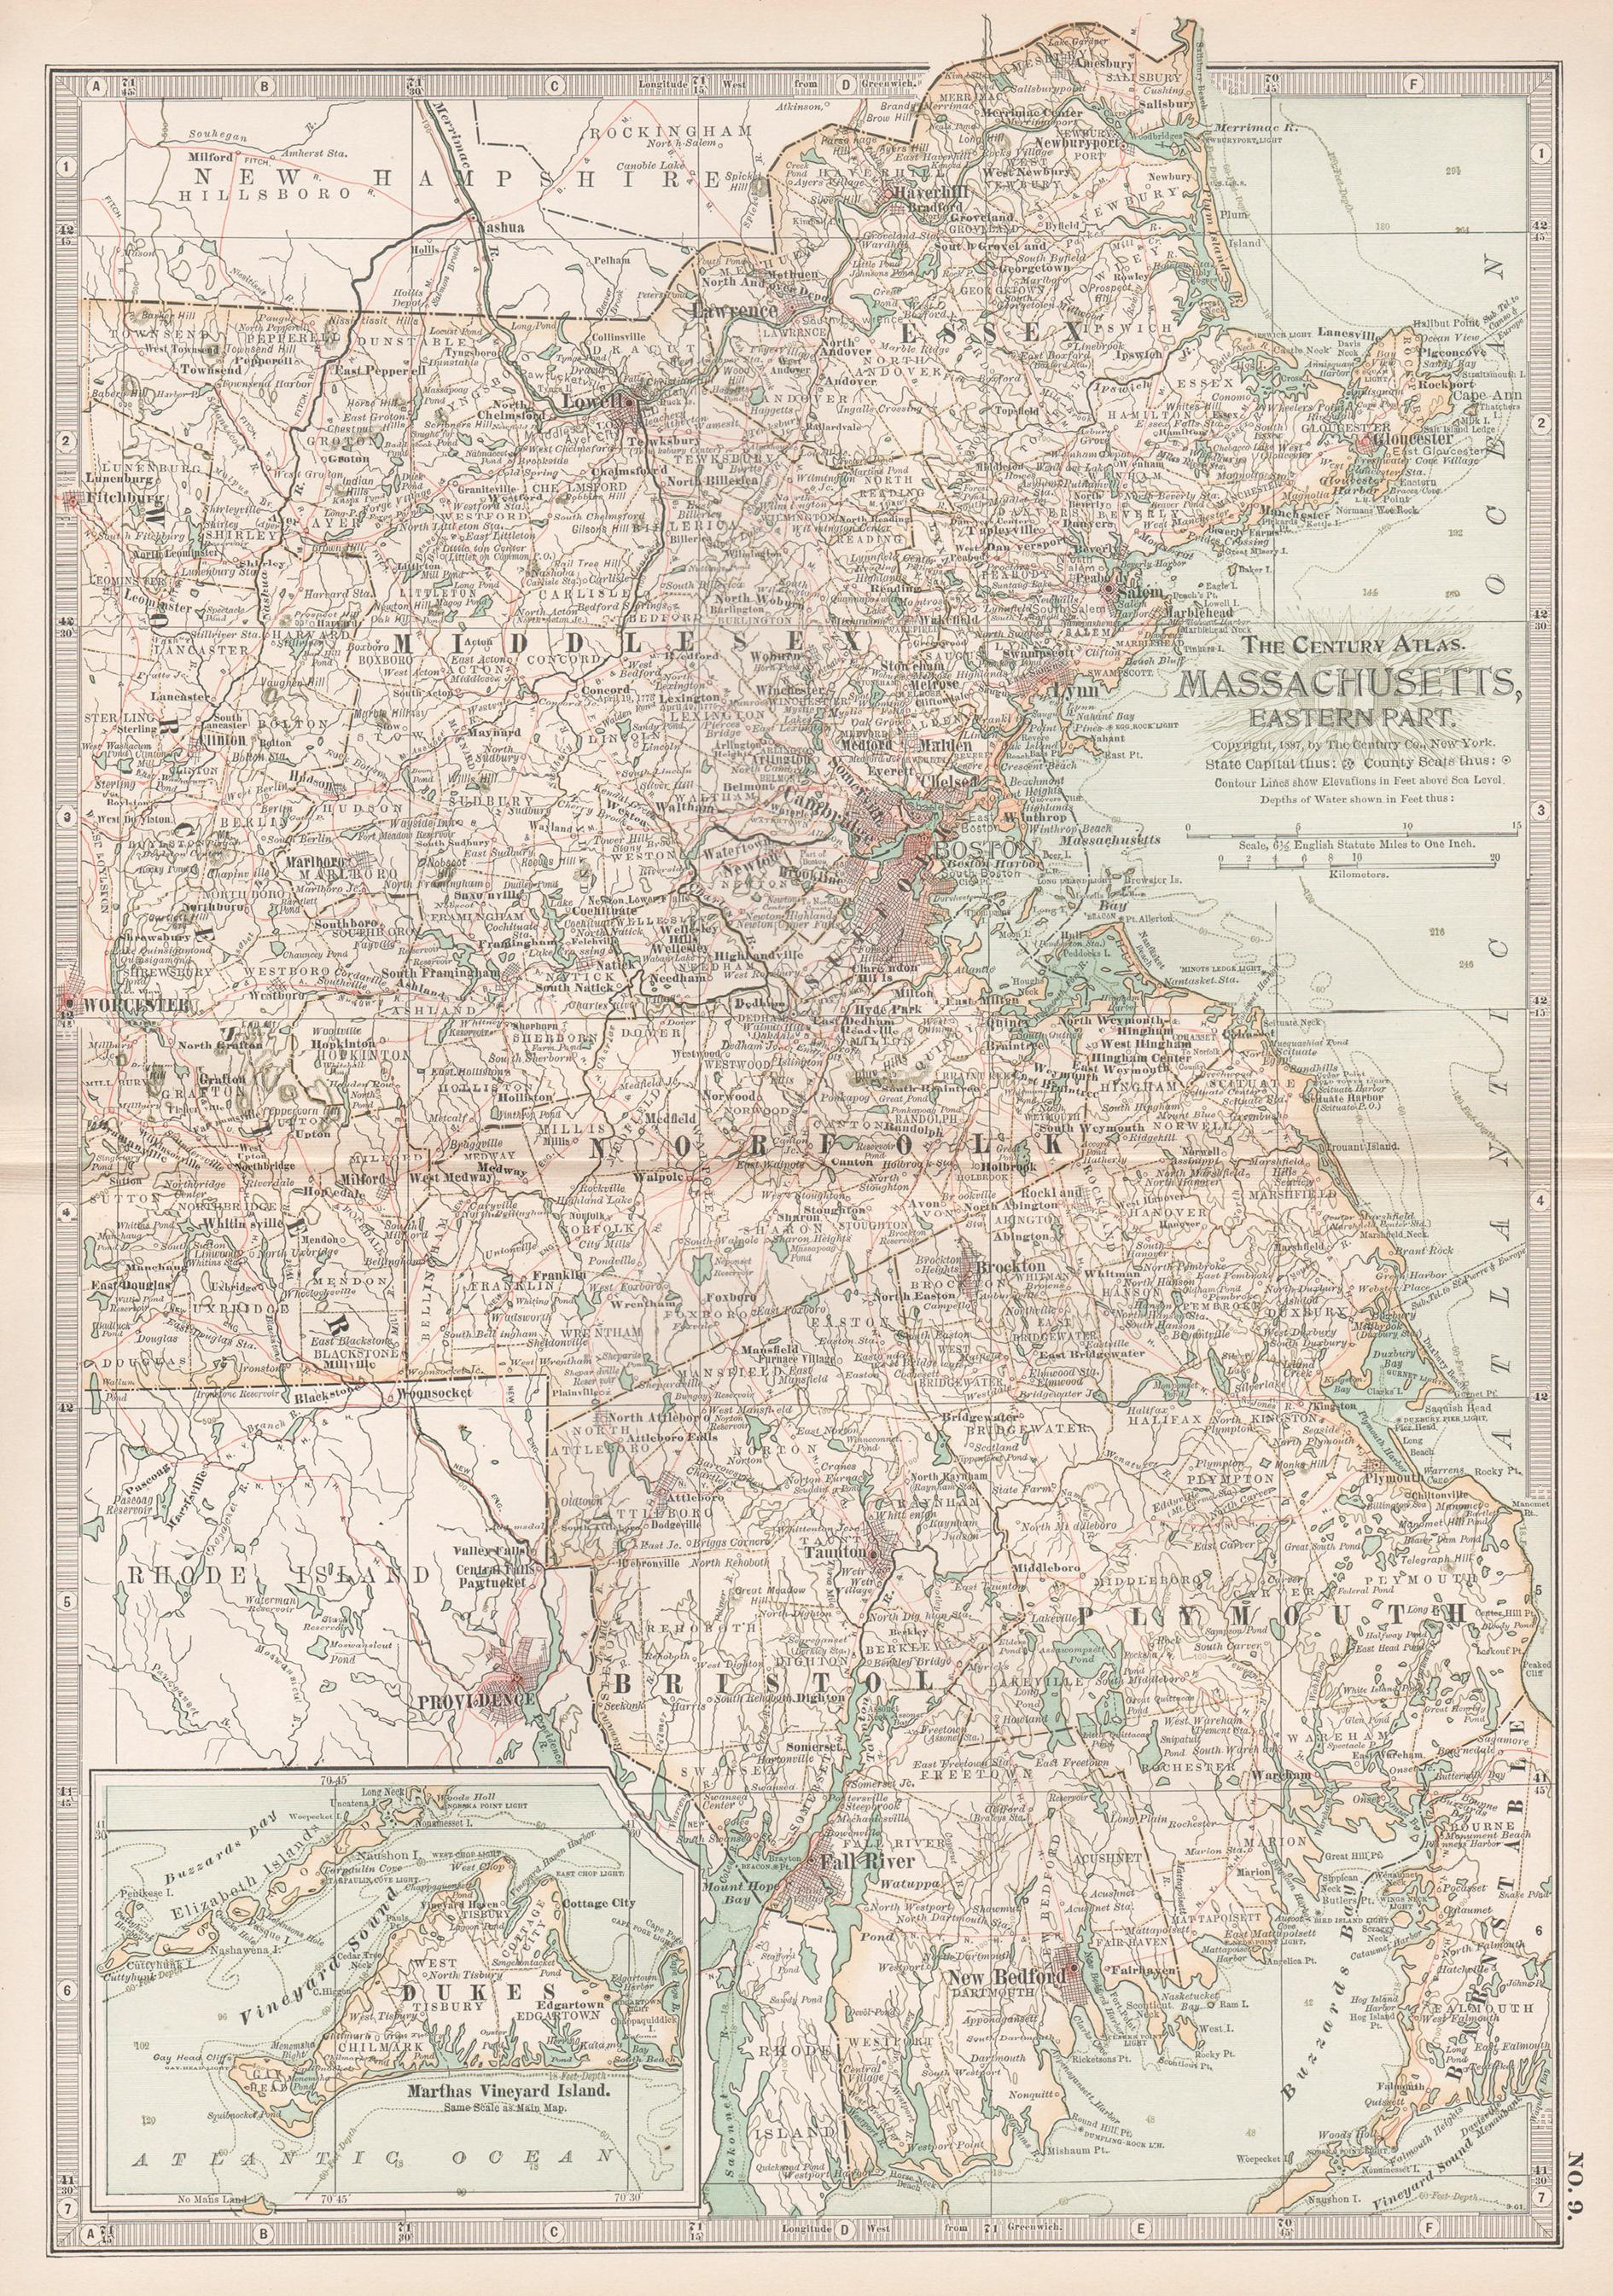 Unknown Print - Massachusetts, Eastern Part. USA. Century Atlas state antique vintage map